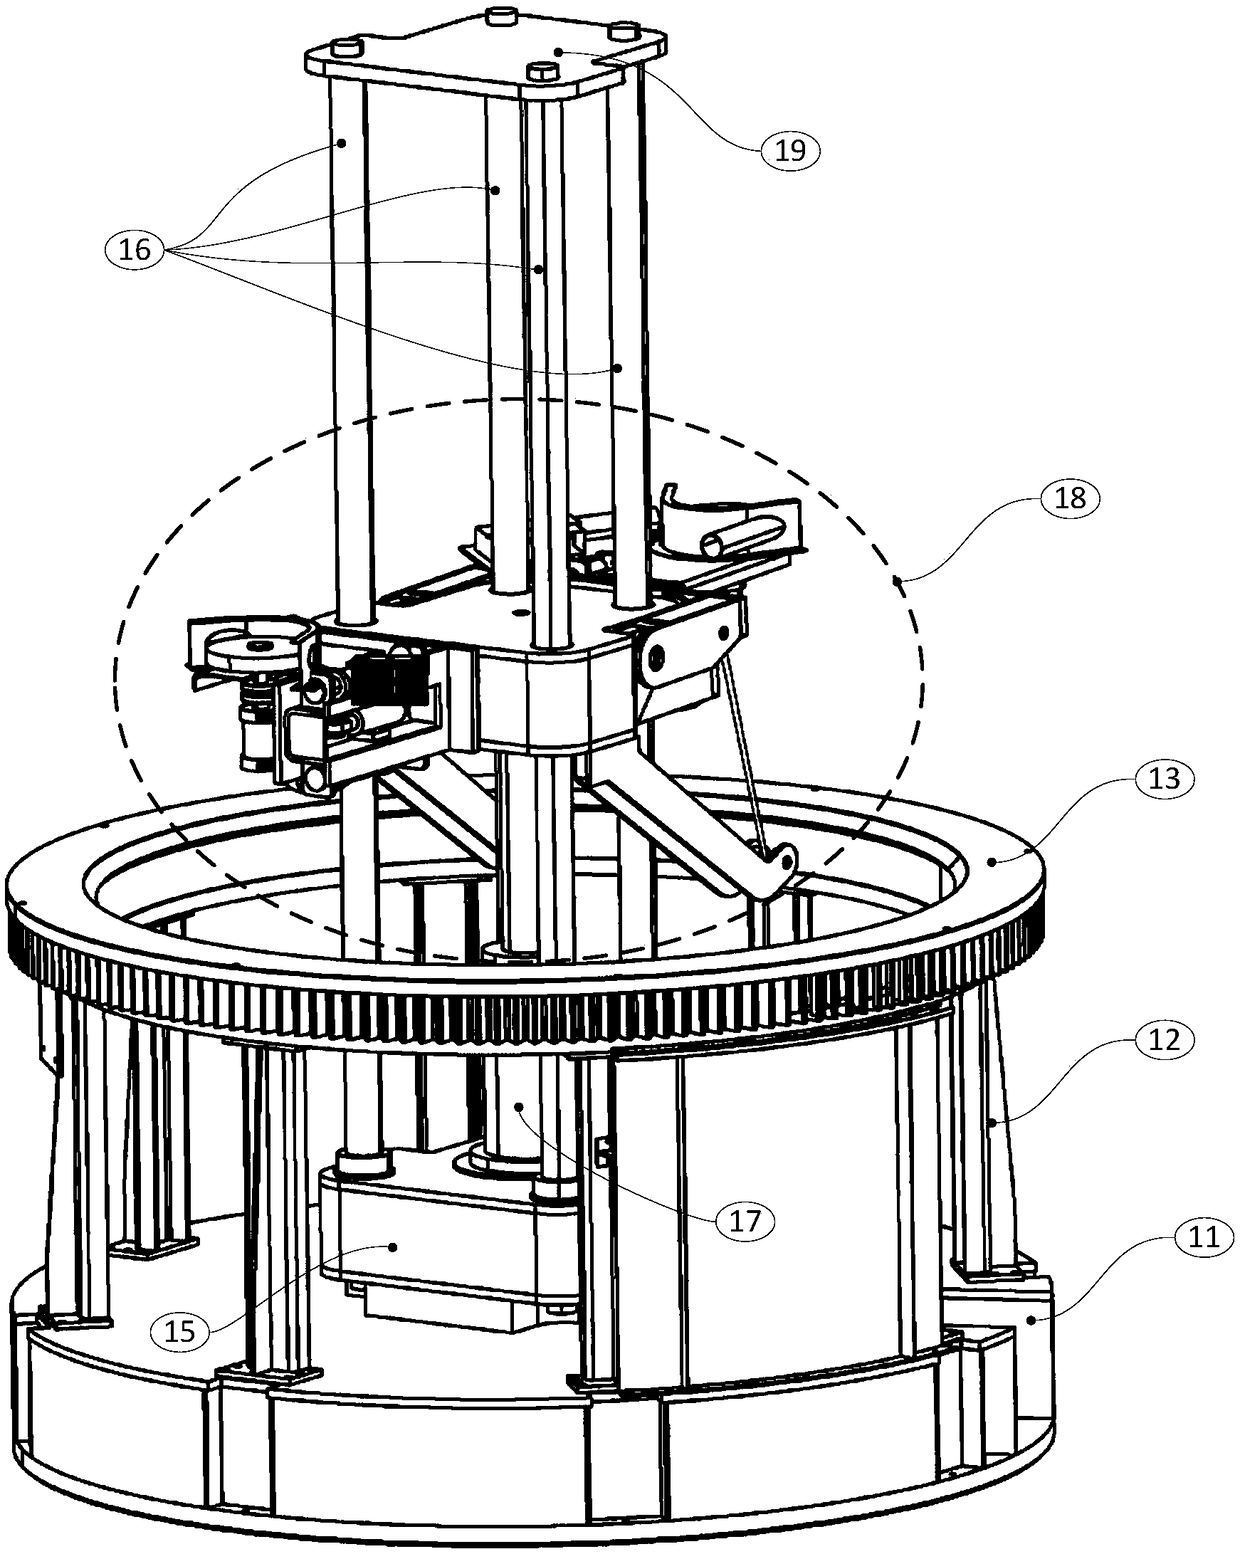 Full-automatic polishing machine for furnace drum